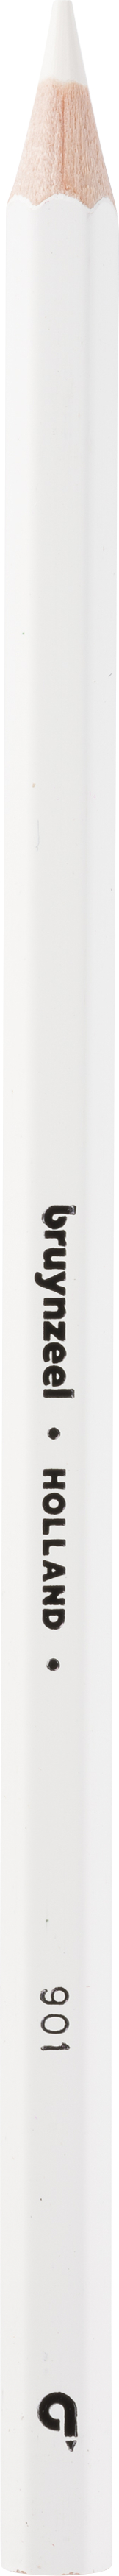 BRUYNZEEL Crayon de couleur Super 3.3mm 60516901 blanc blanc